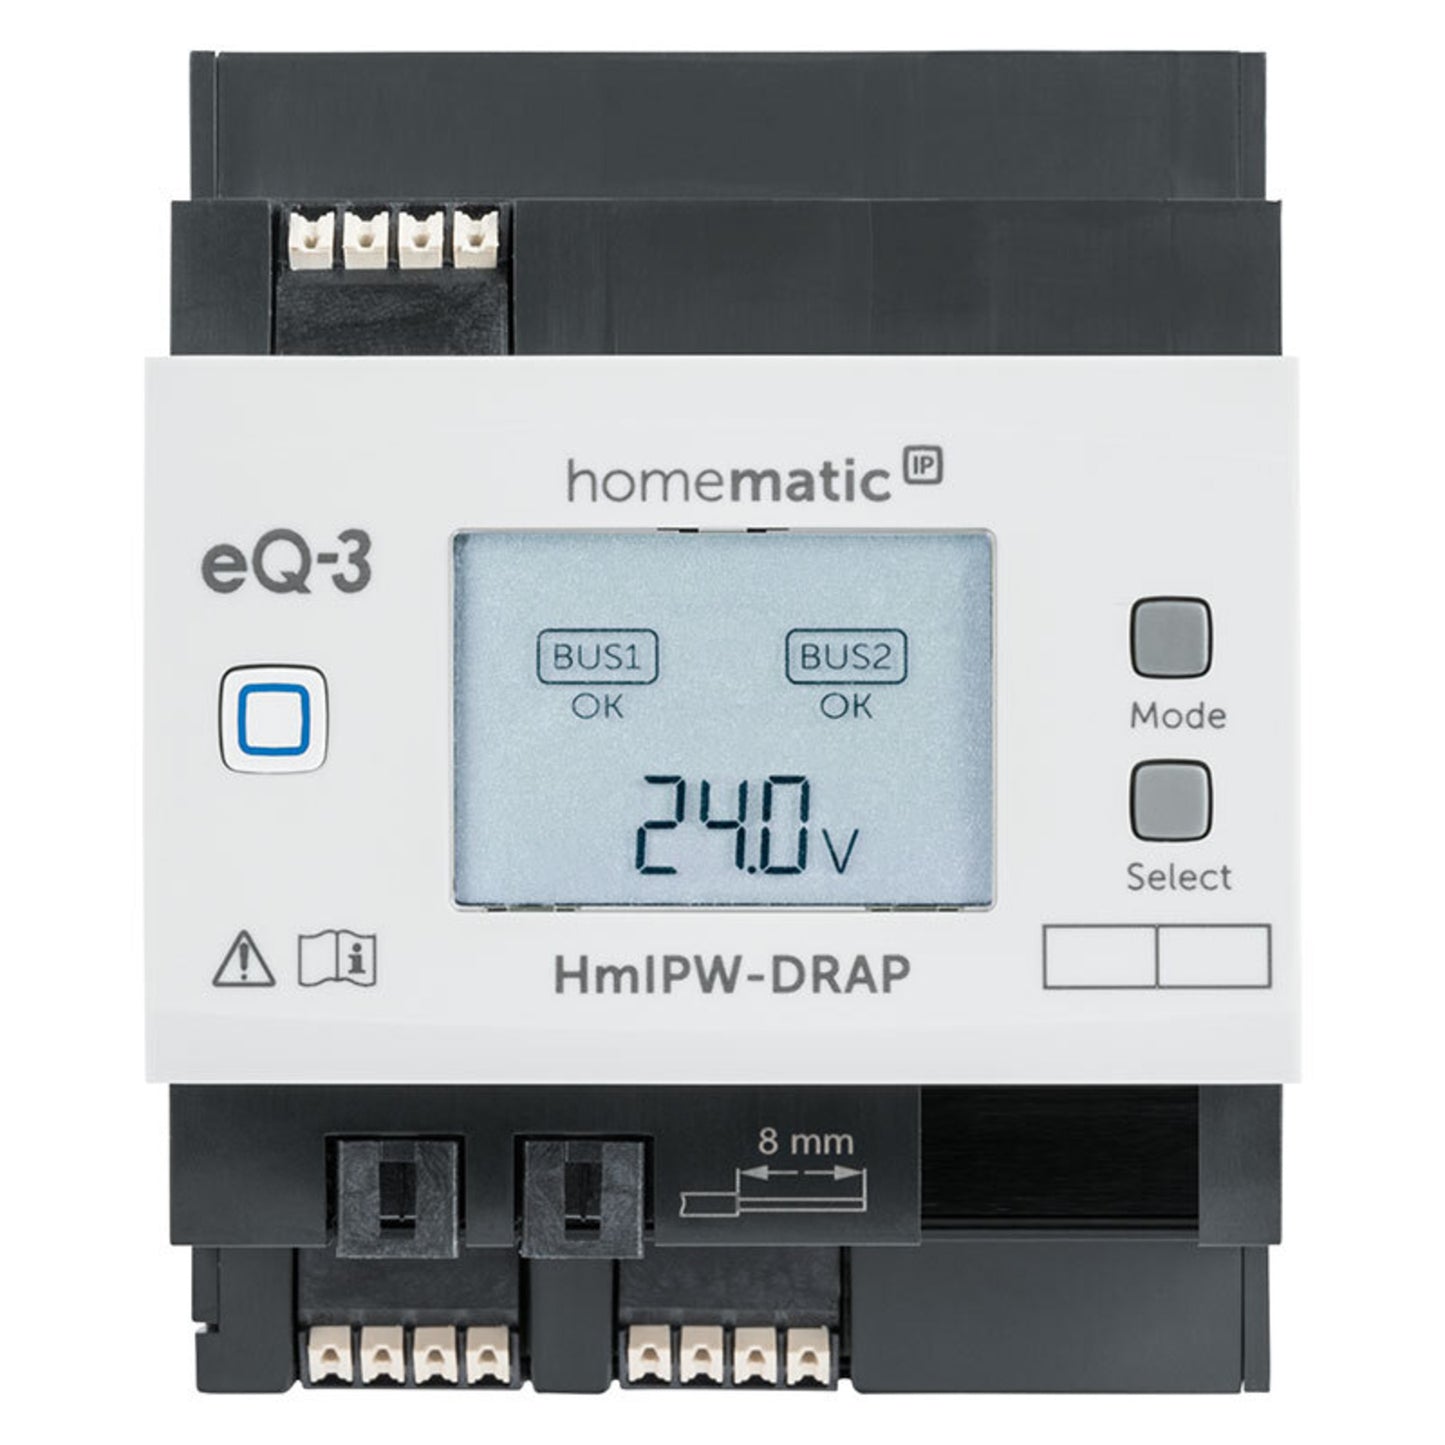 Homematic IP Wired Starter Set Licht 1 x HAP, 1 x DRAP, 1 x Netzteil, 6 x WRC6, 3 x DRS8